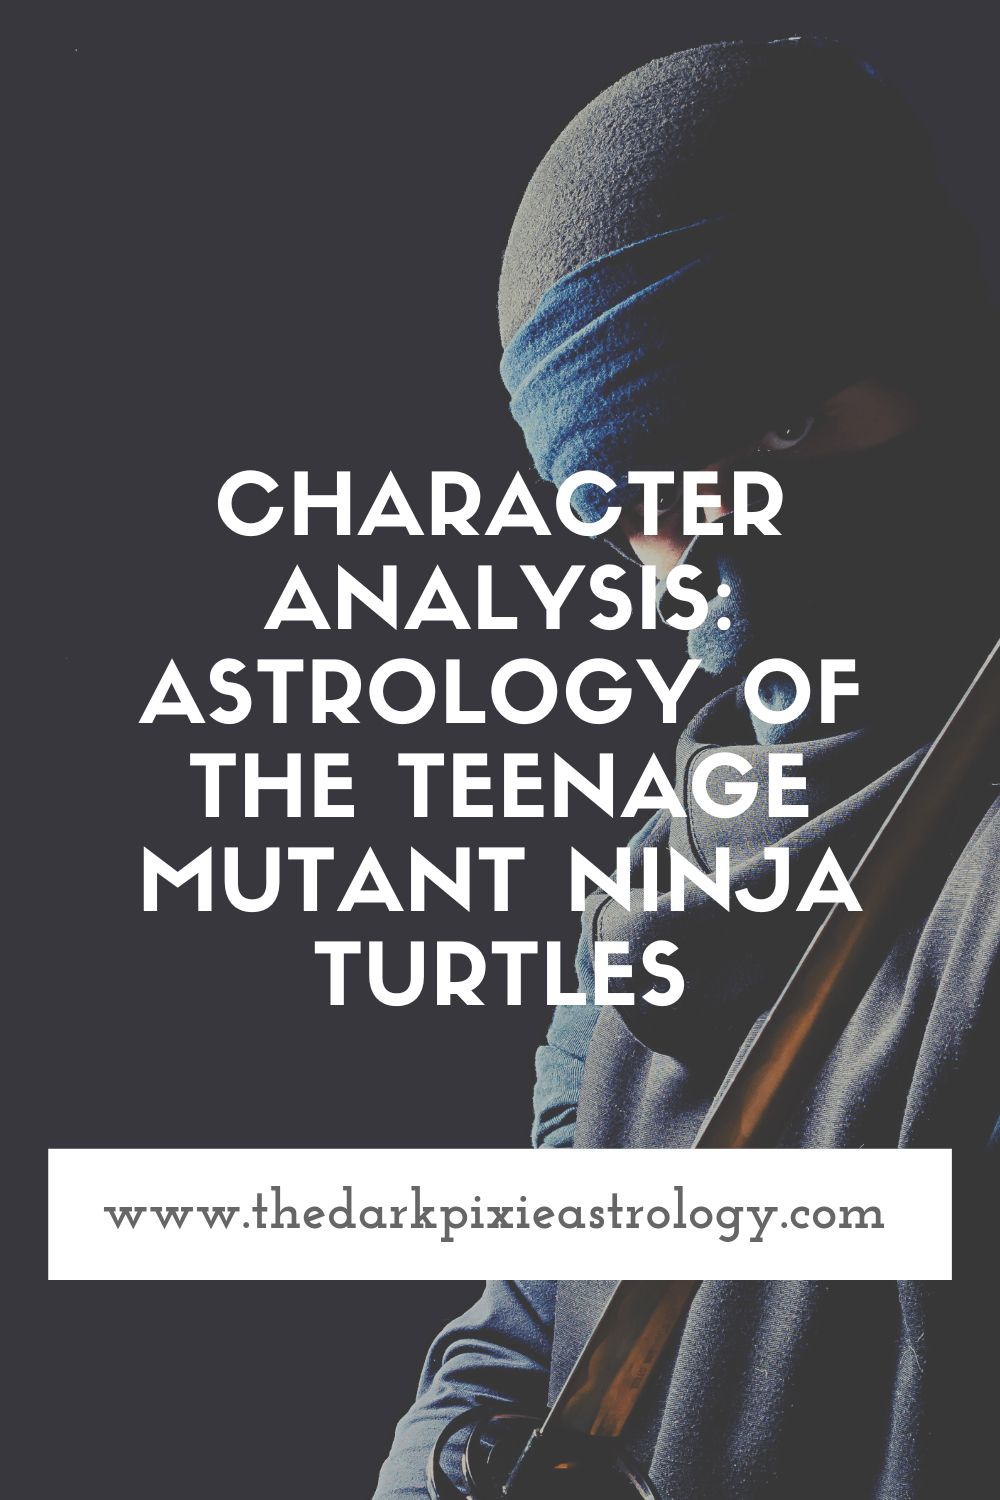 Character Analysis: The Astrology of the Teenage Mutant Ninja Turtles - The Dark Pixie Astrology